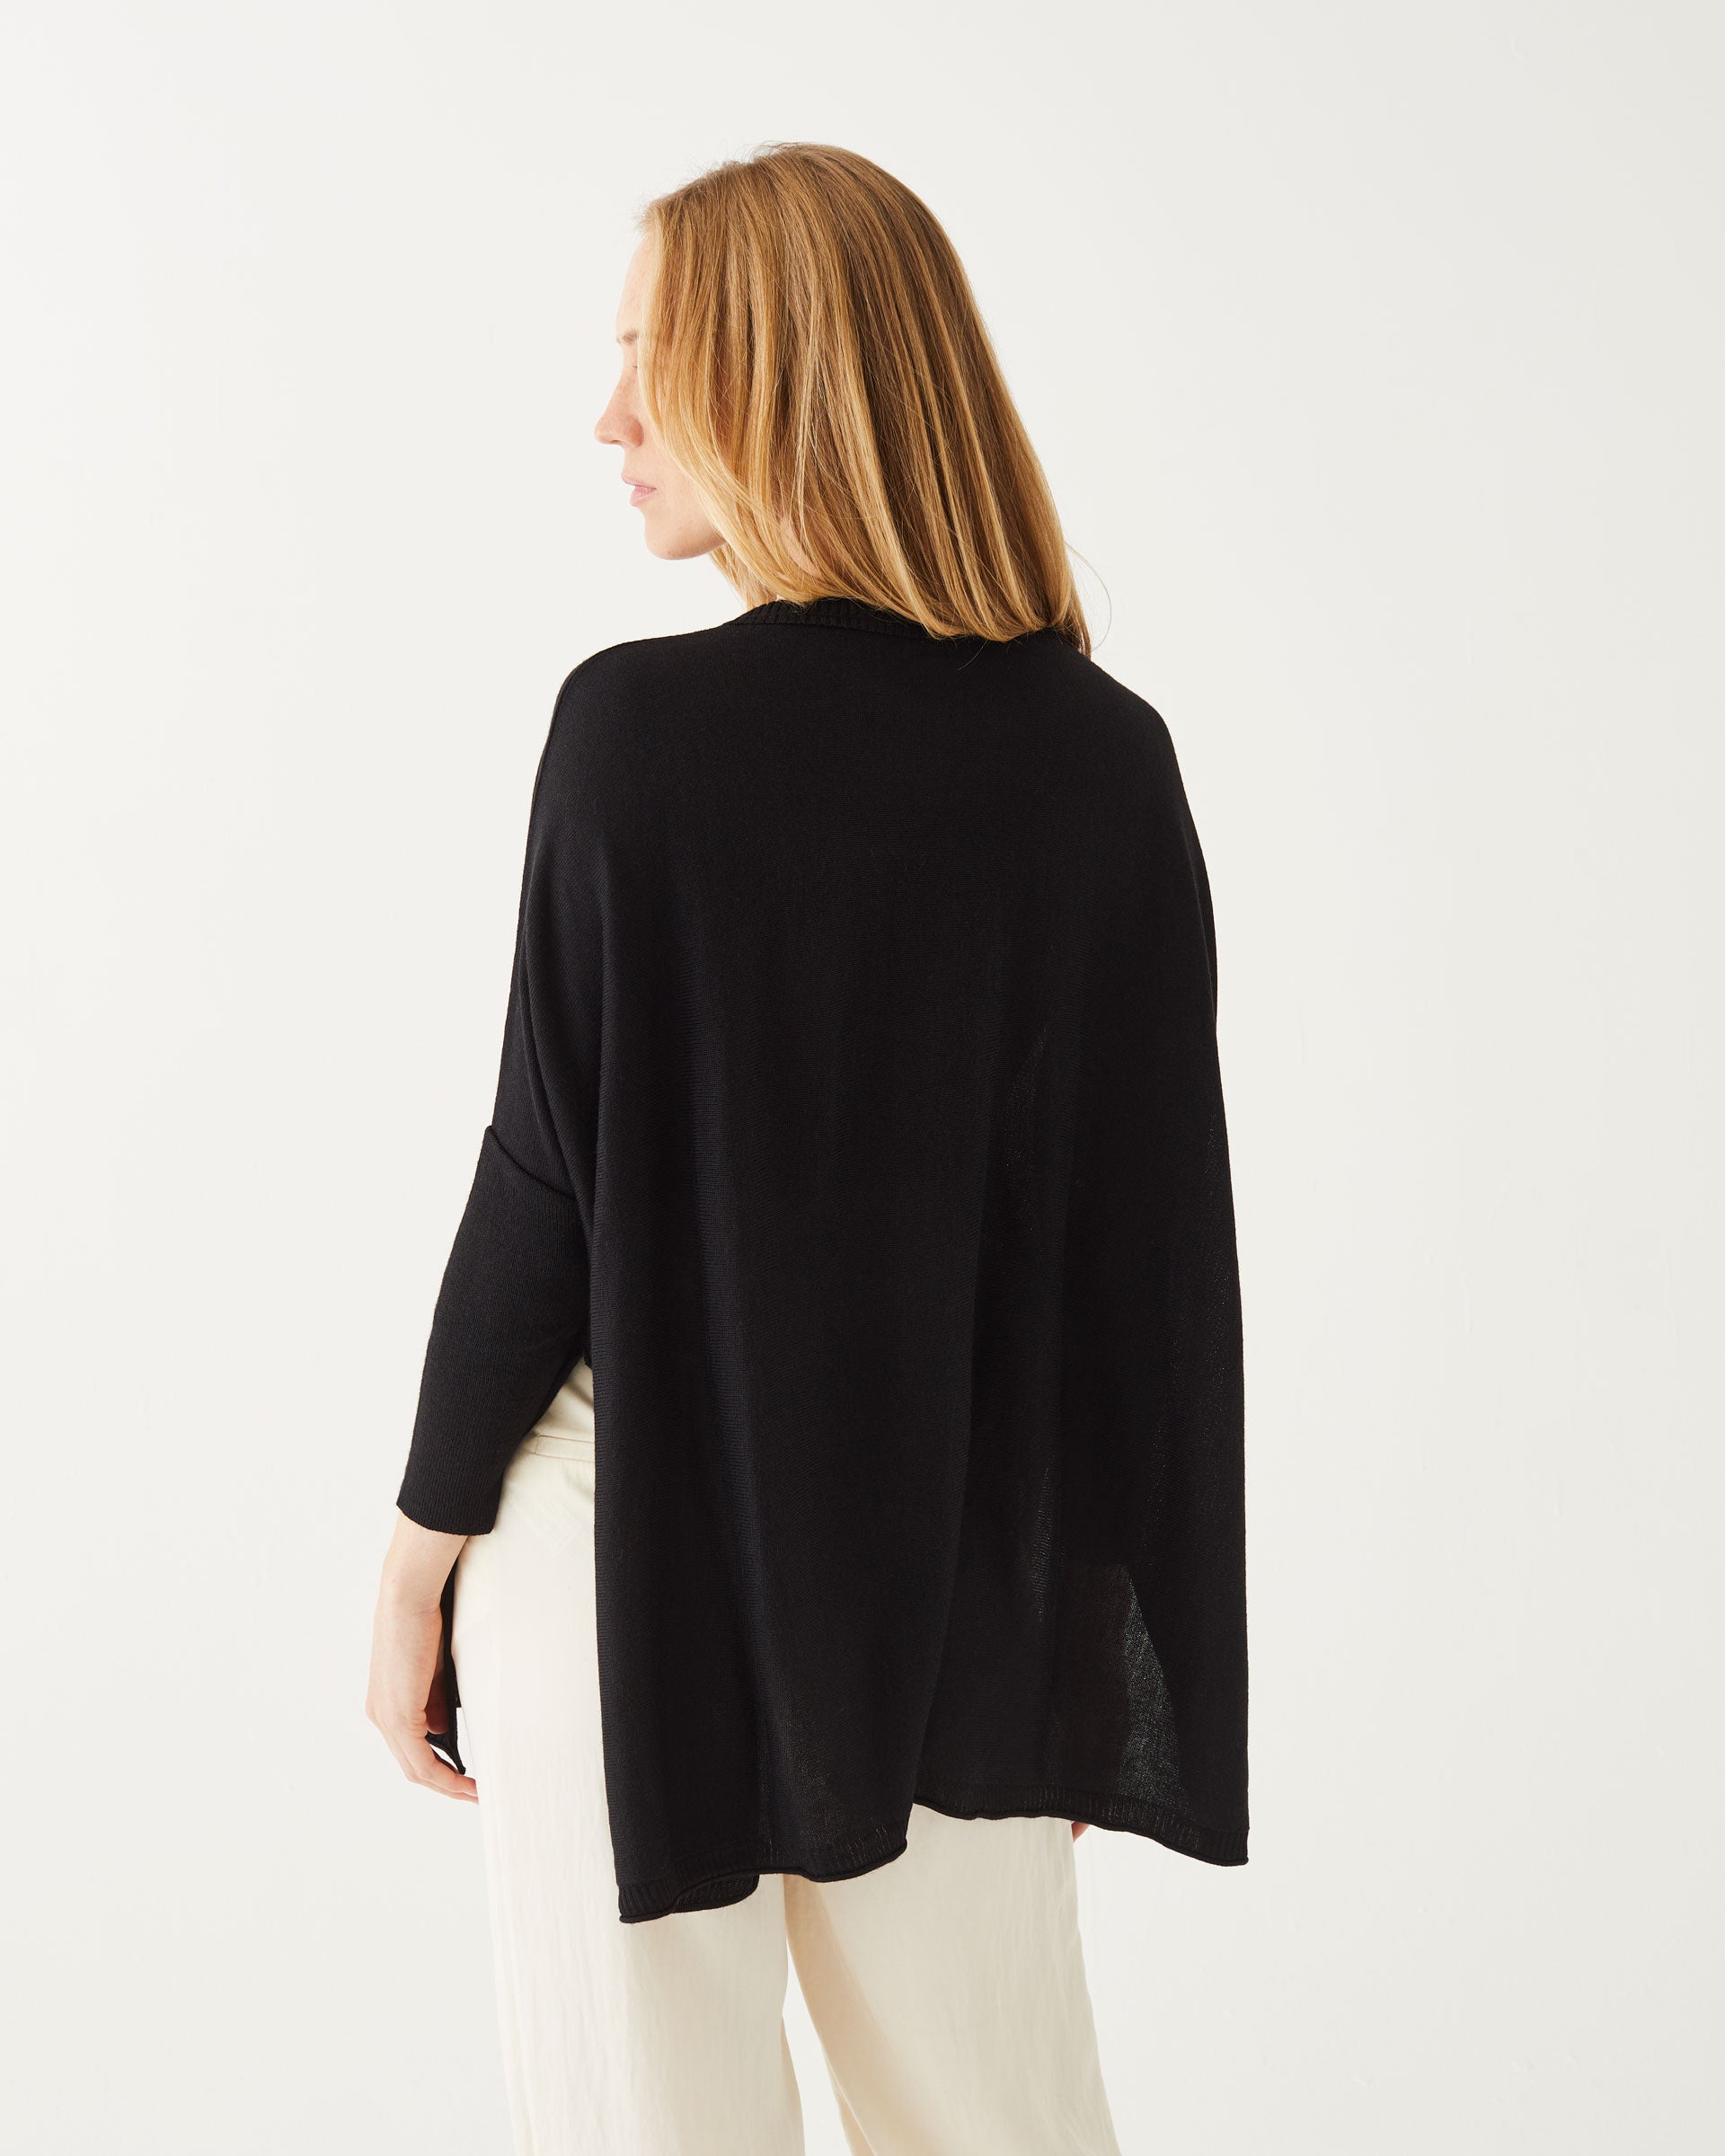 Women's Oversized Crewneck Knit Sweater in Black Back View Drape